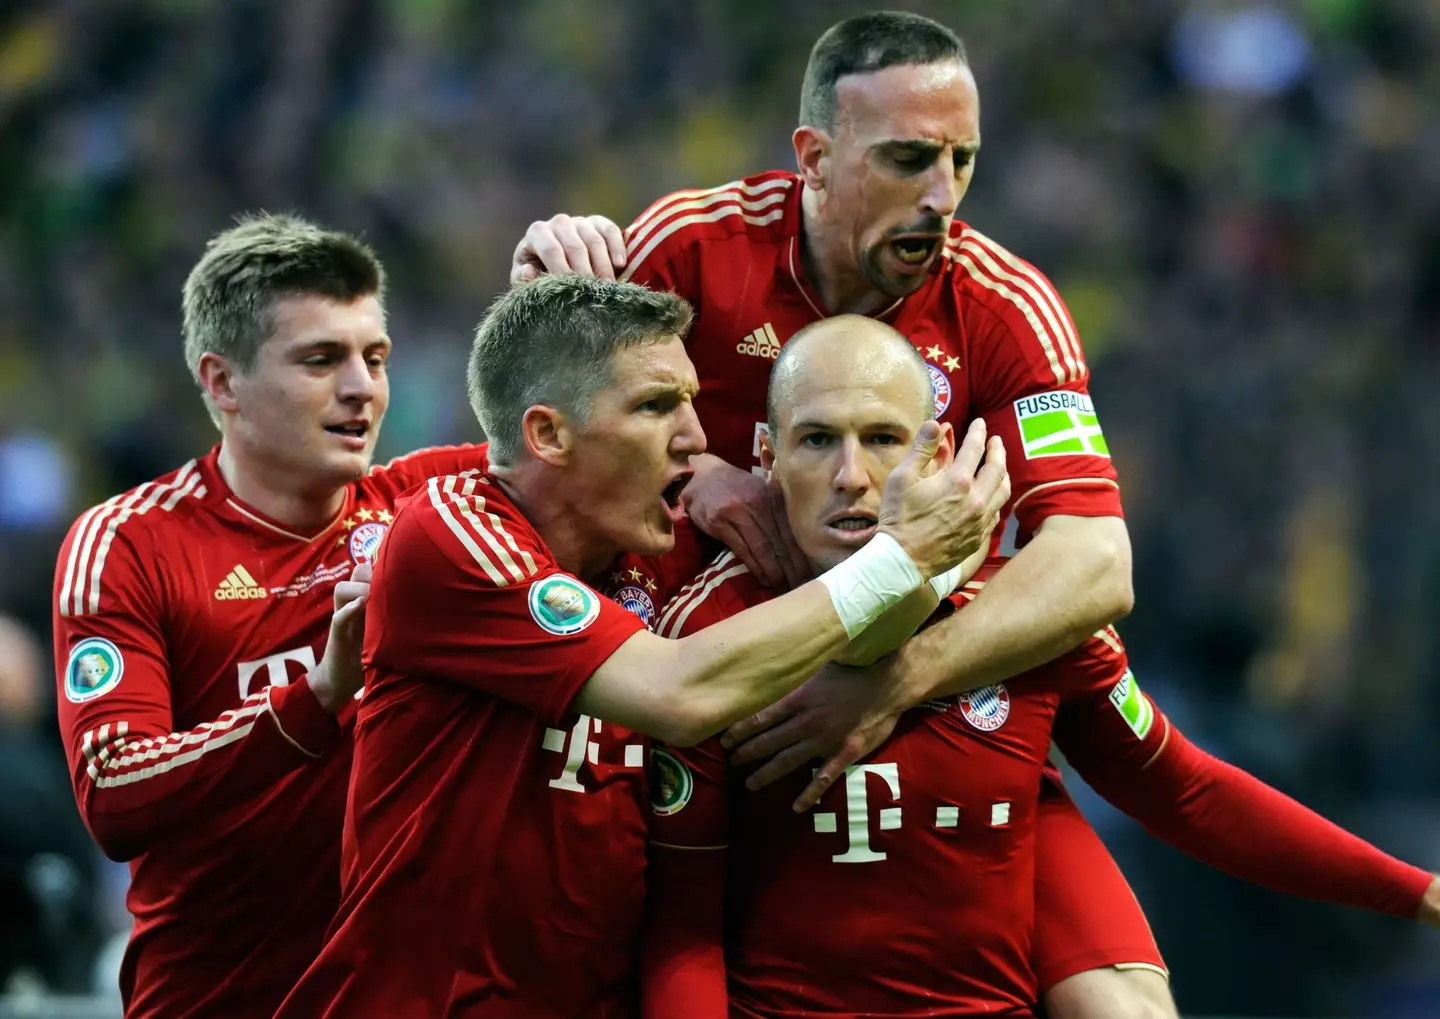 Arjen Robben forged a memorable partnership with Franck Ribery at Bayern Munich.